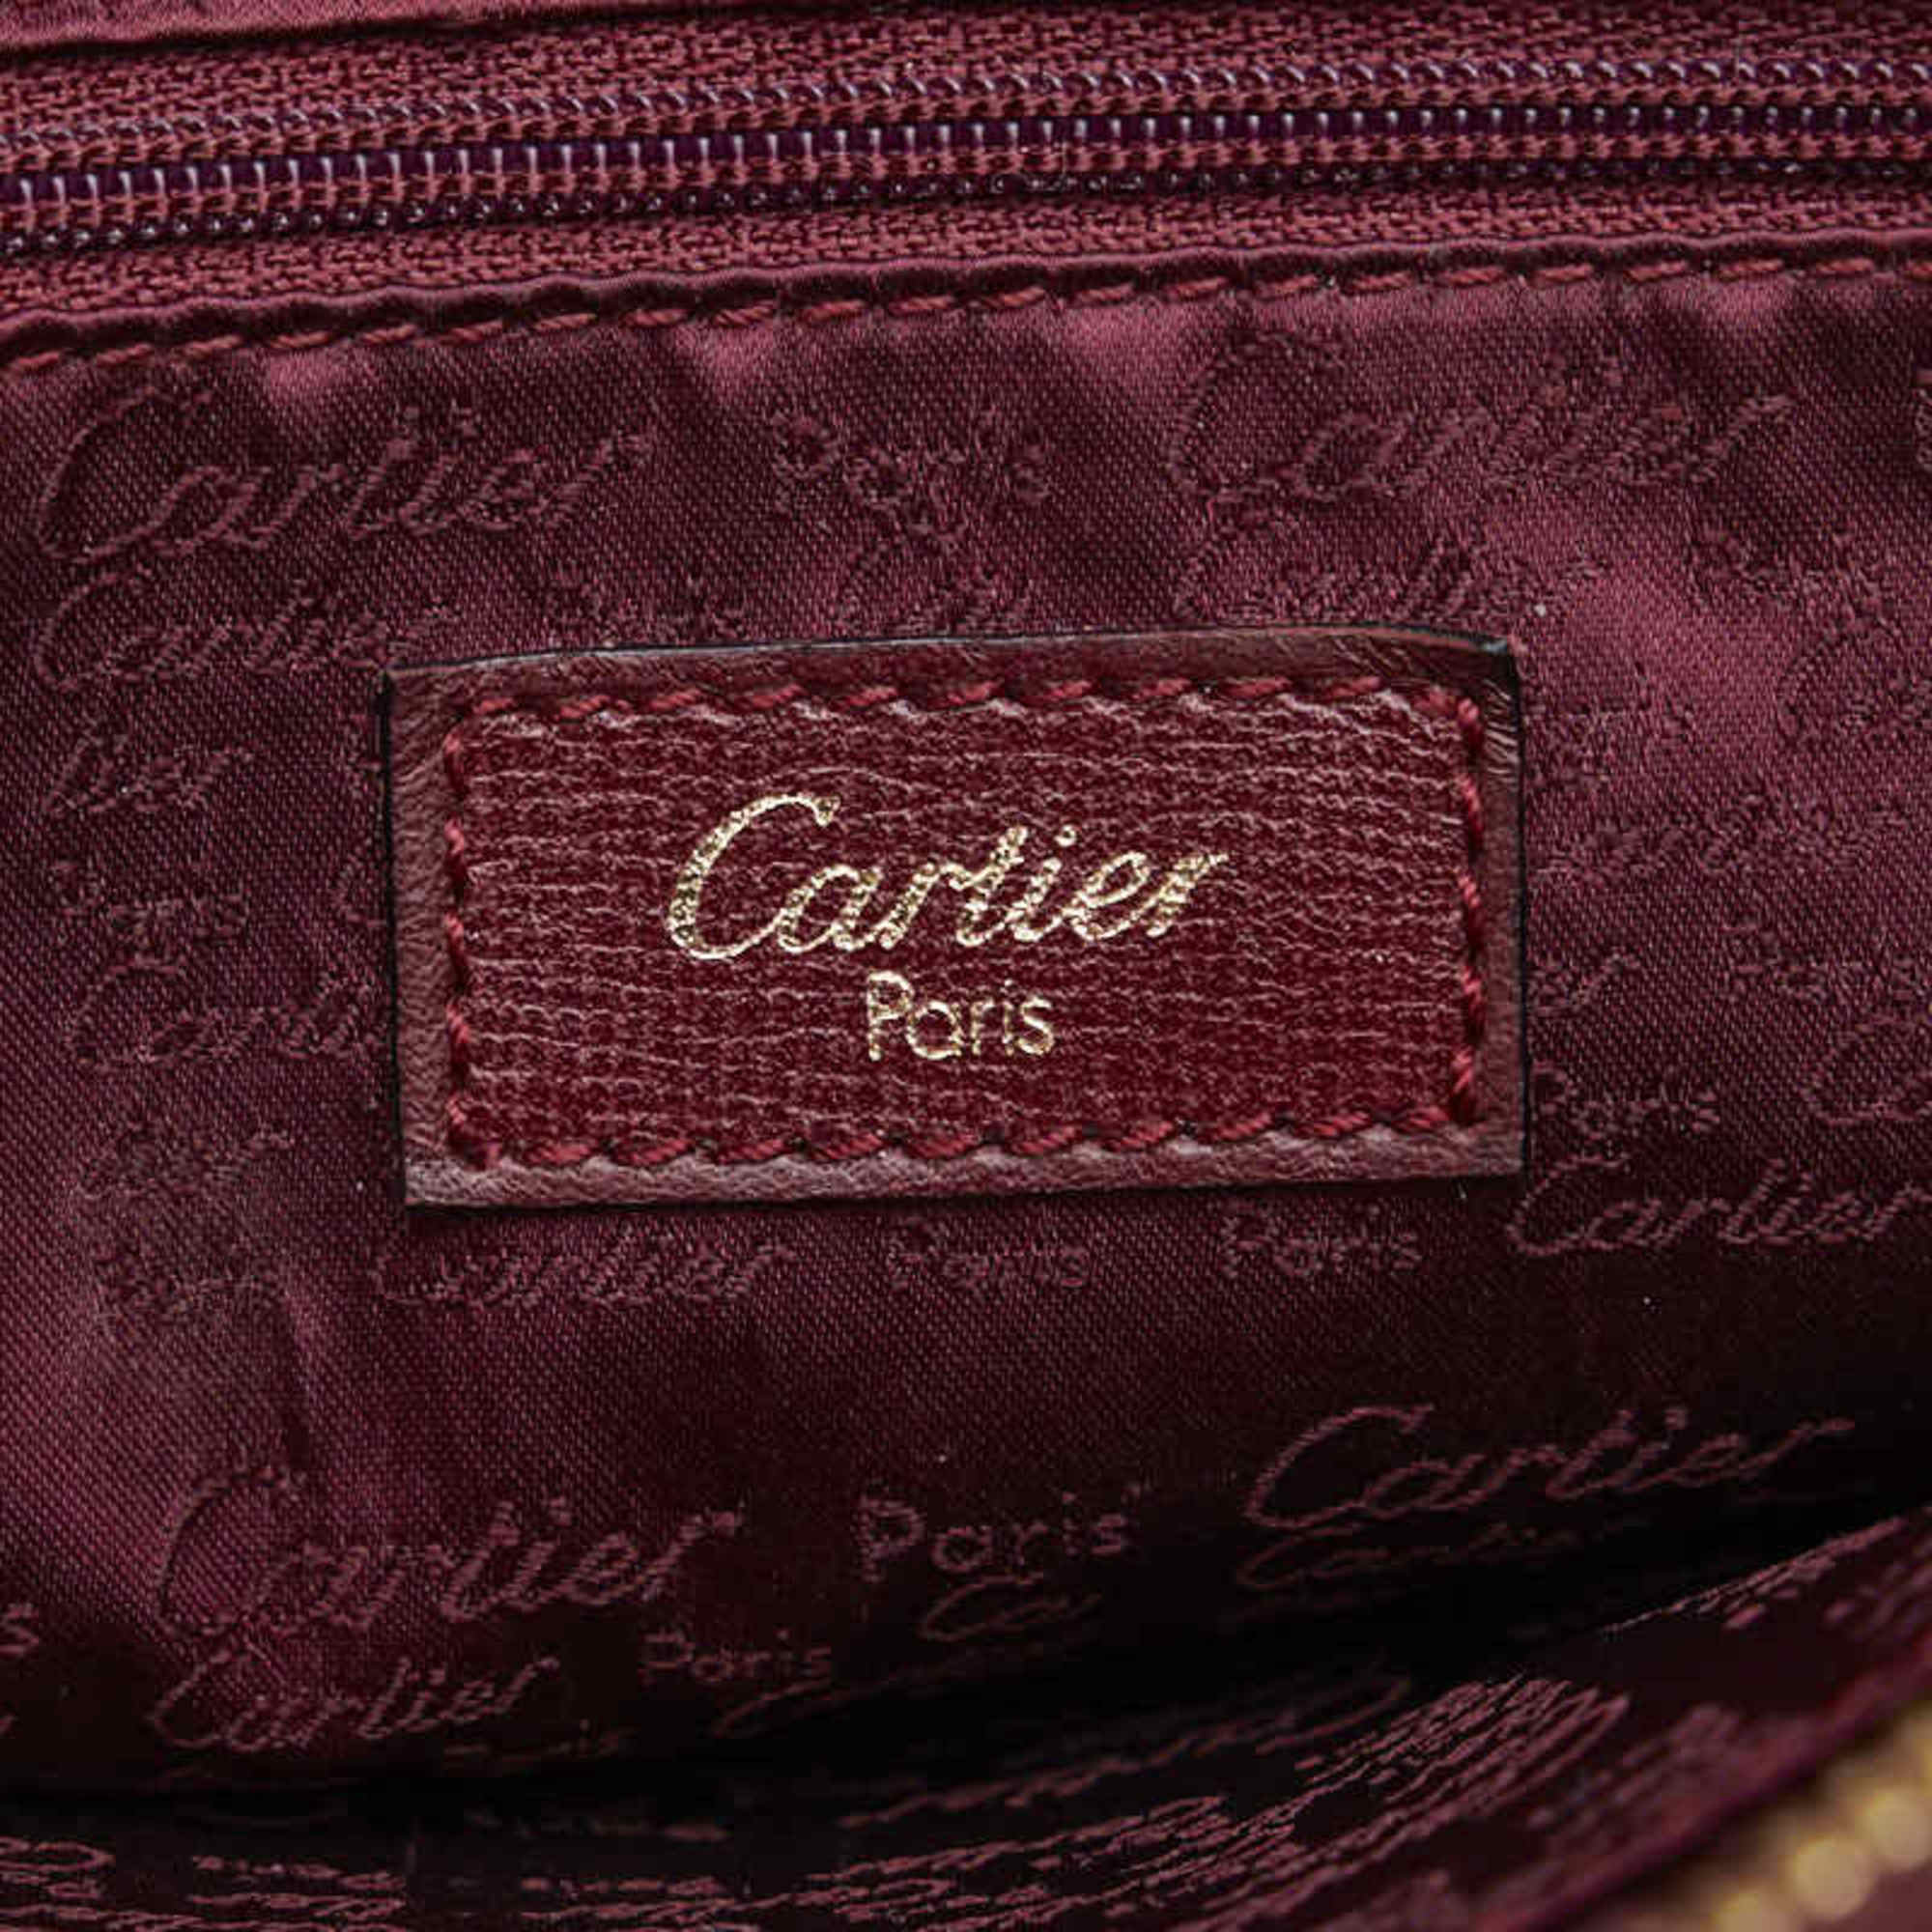 Cartier Must Line Handbag Tote Bag Wine Red Leather Women's CARTIER